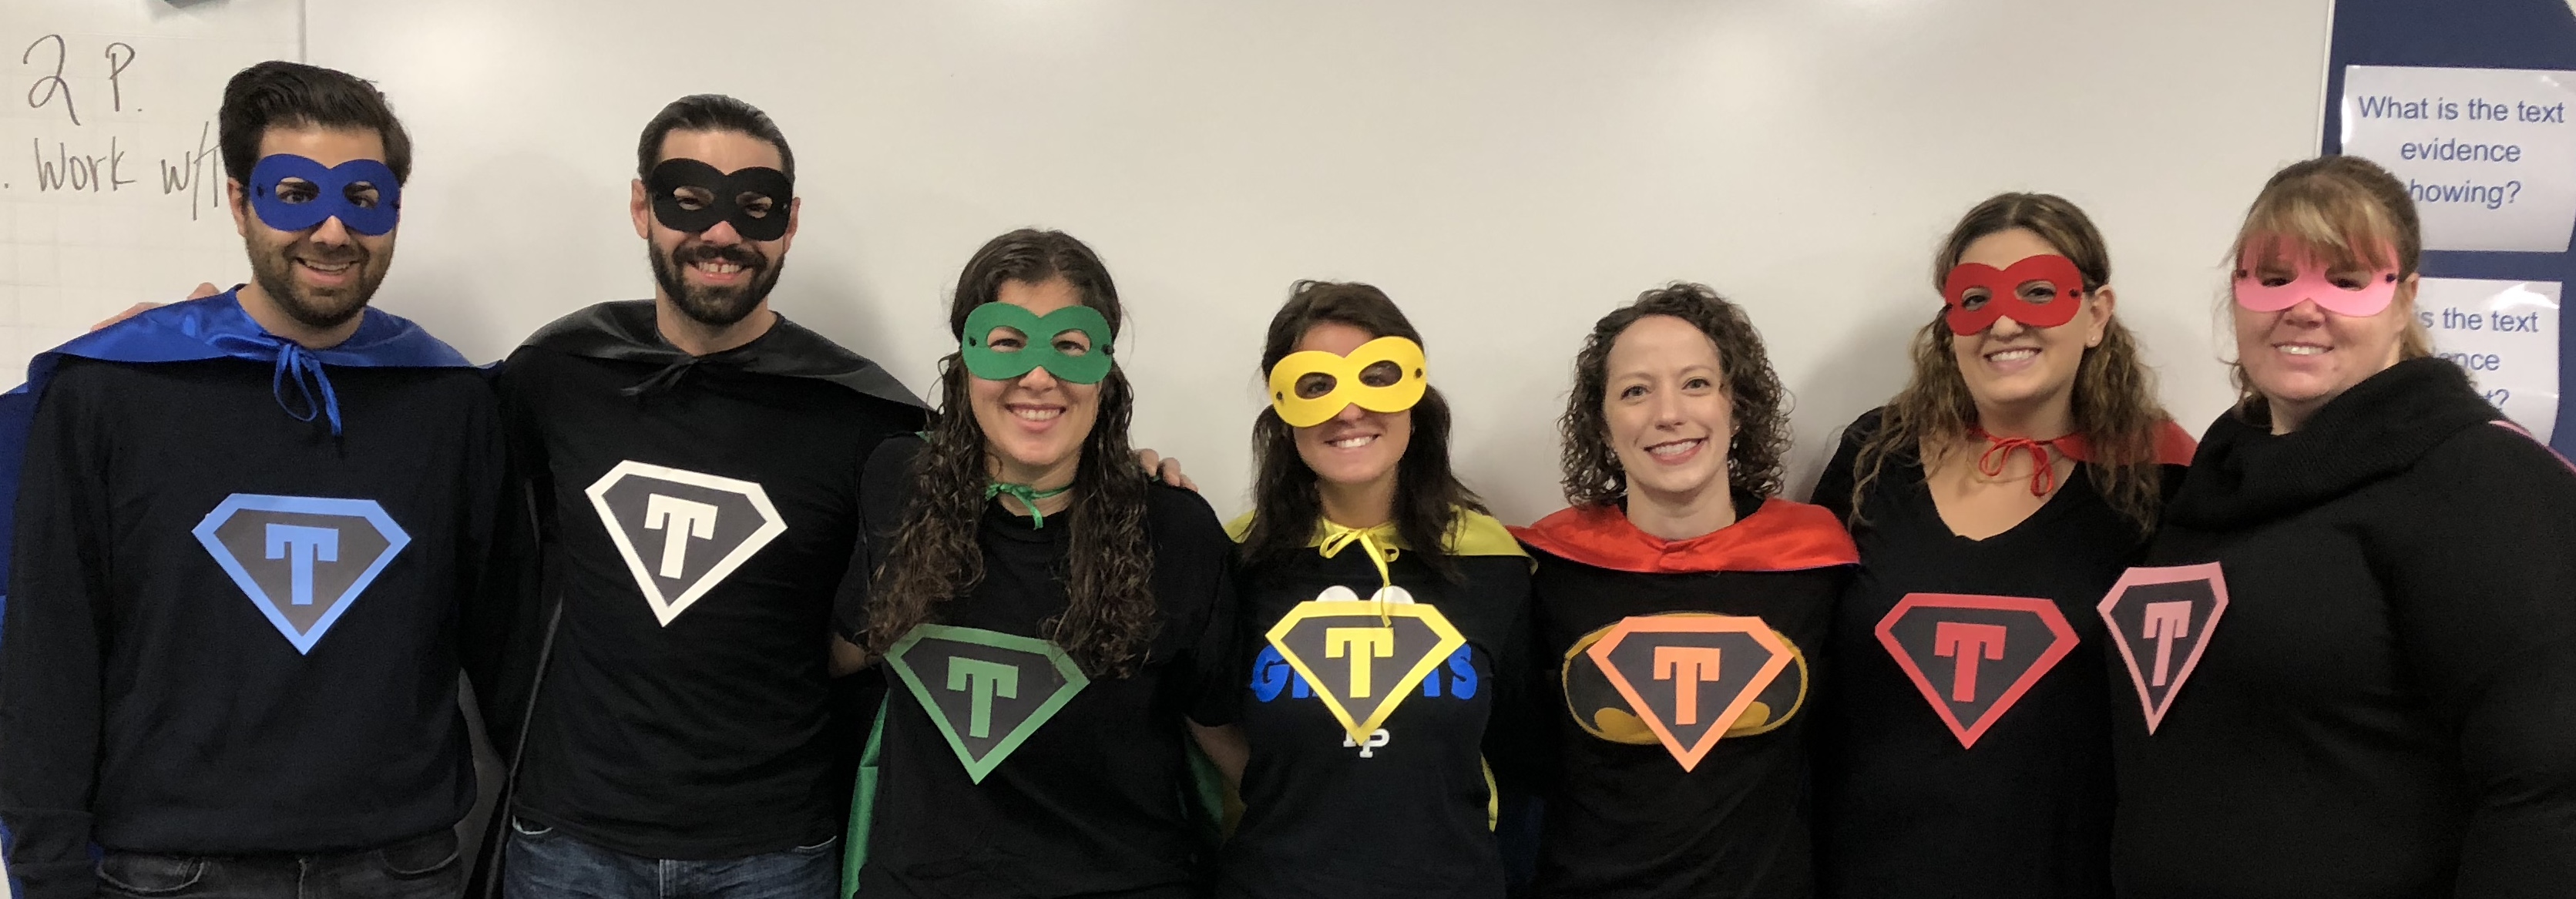 Teachers dressed as superheroes